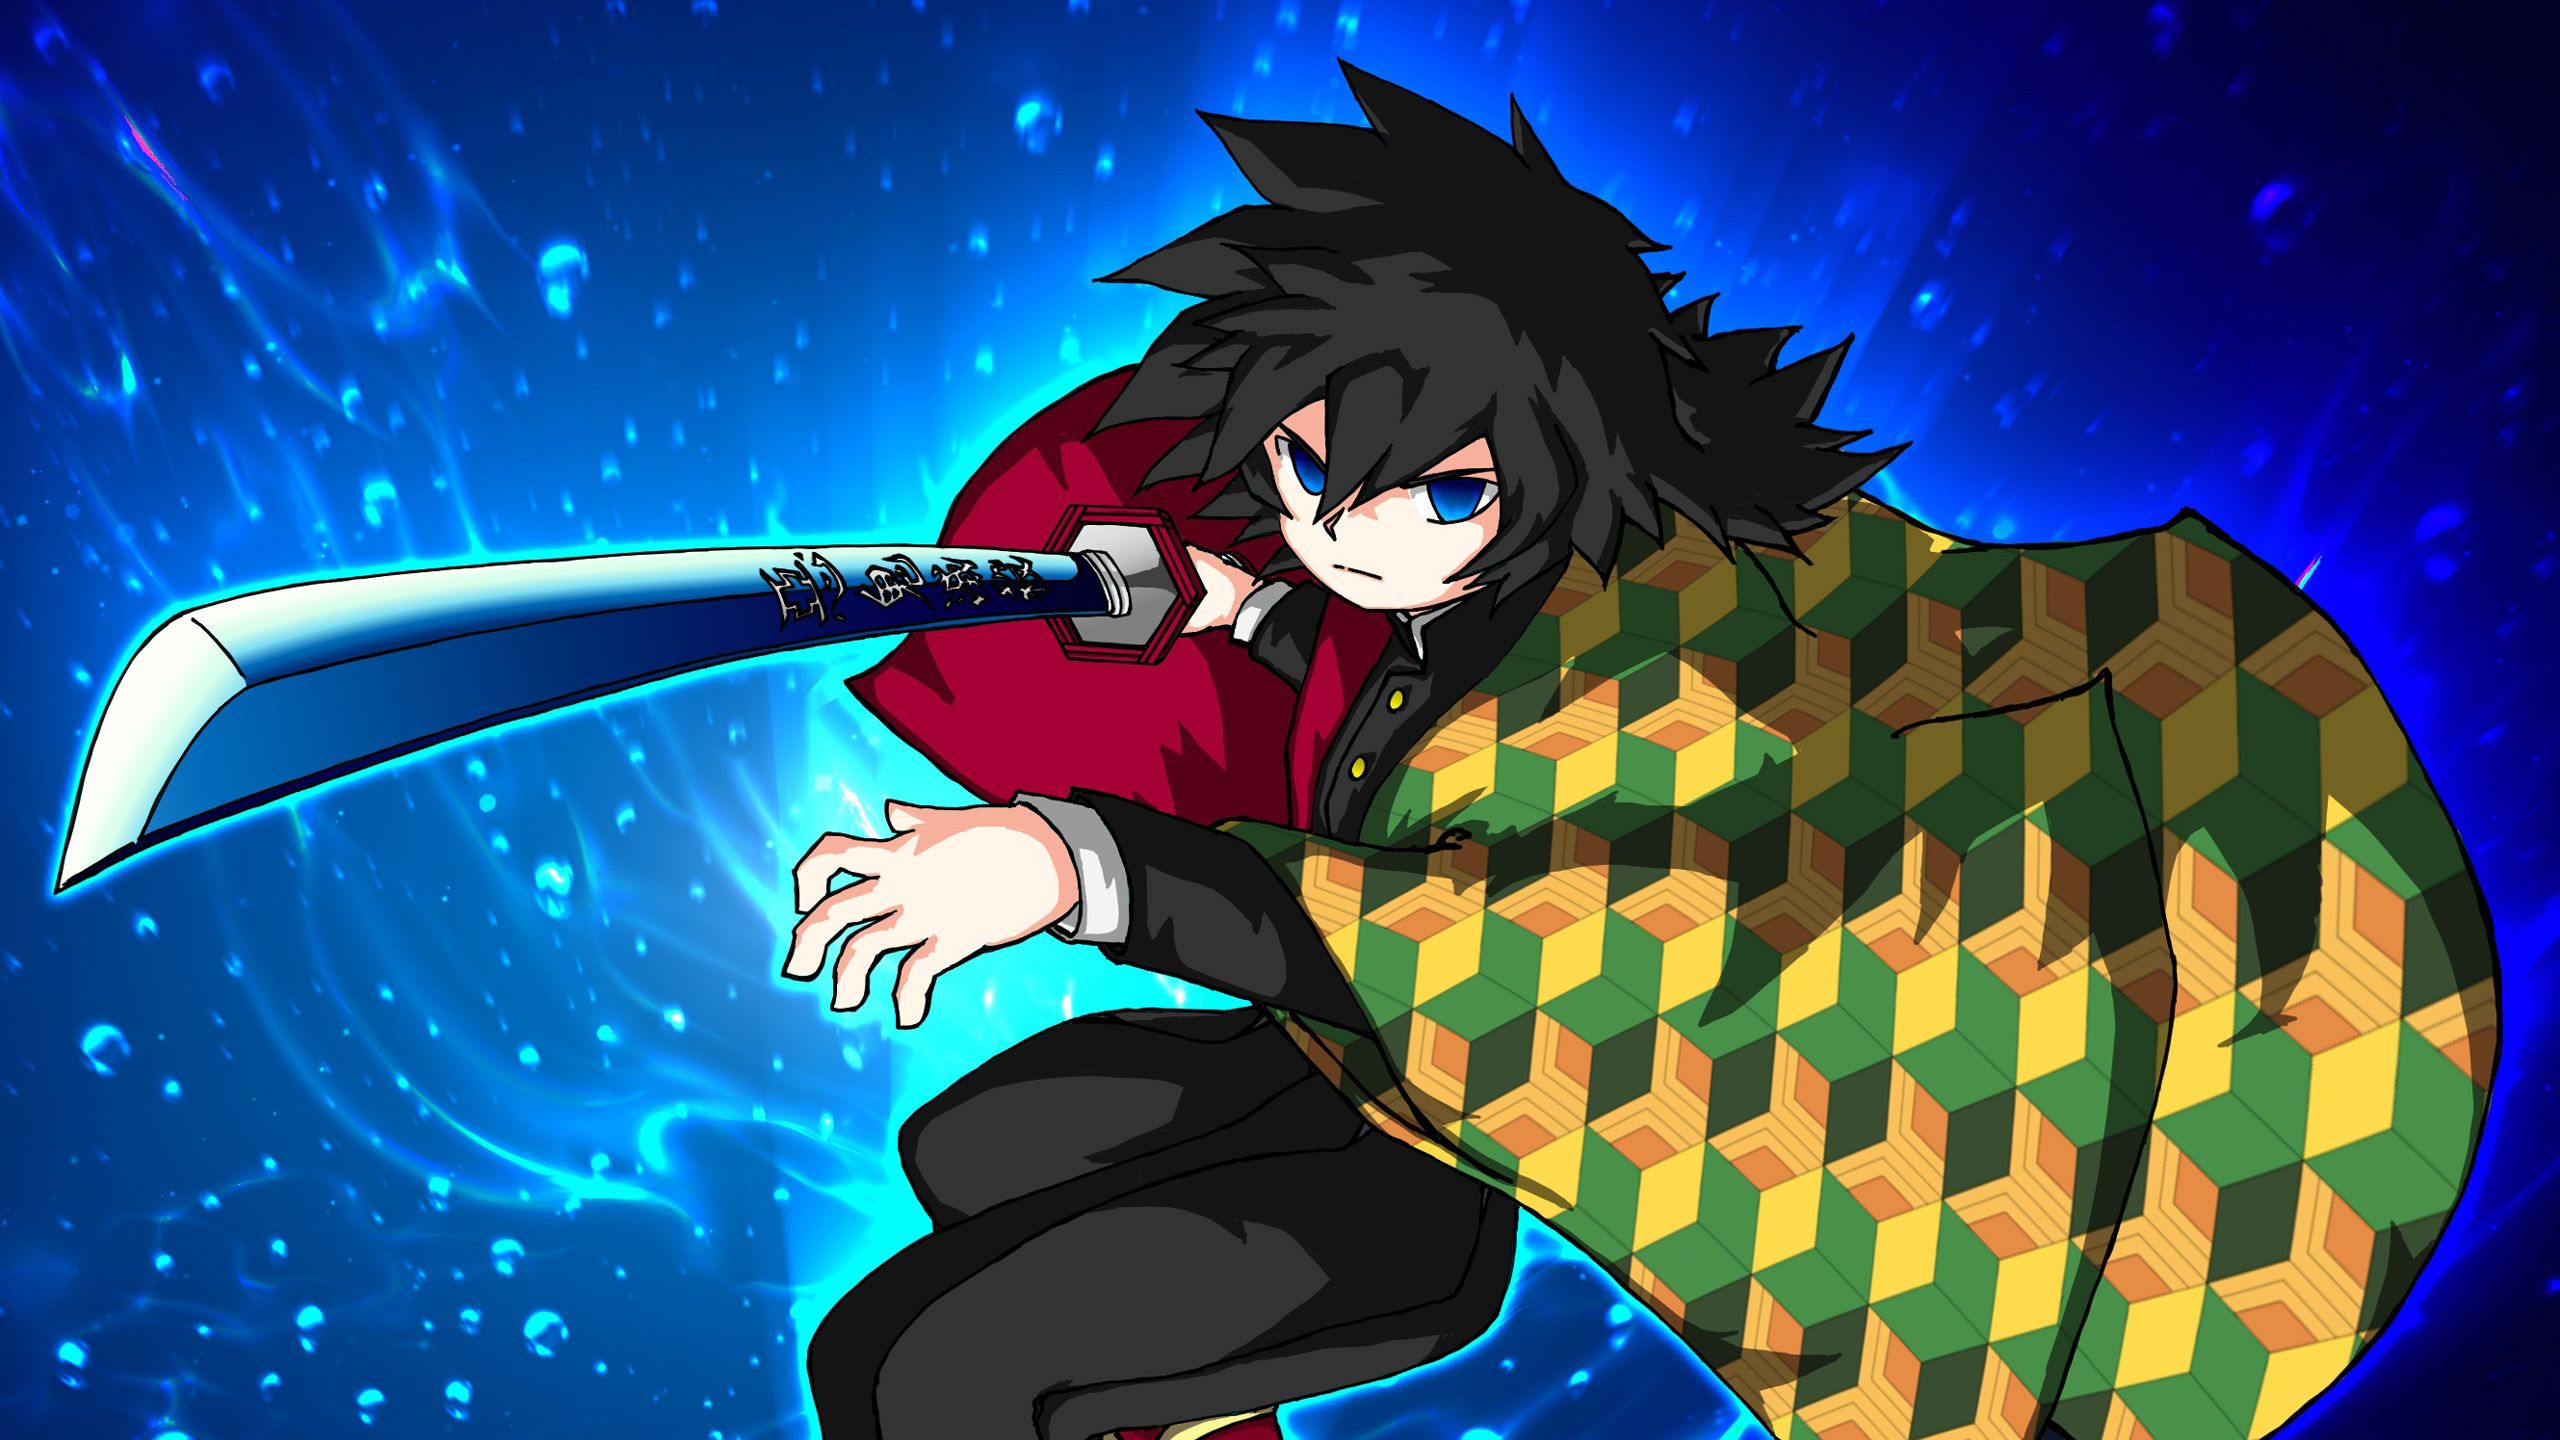 Demon Slayer Giyuu Tomioka Having Sword With Blue Eyes And Background Of Dark Blue And Center Blue Lighting HD Anime Wallpaper